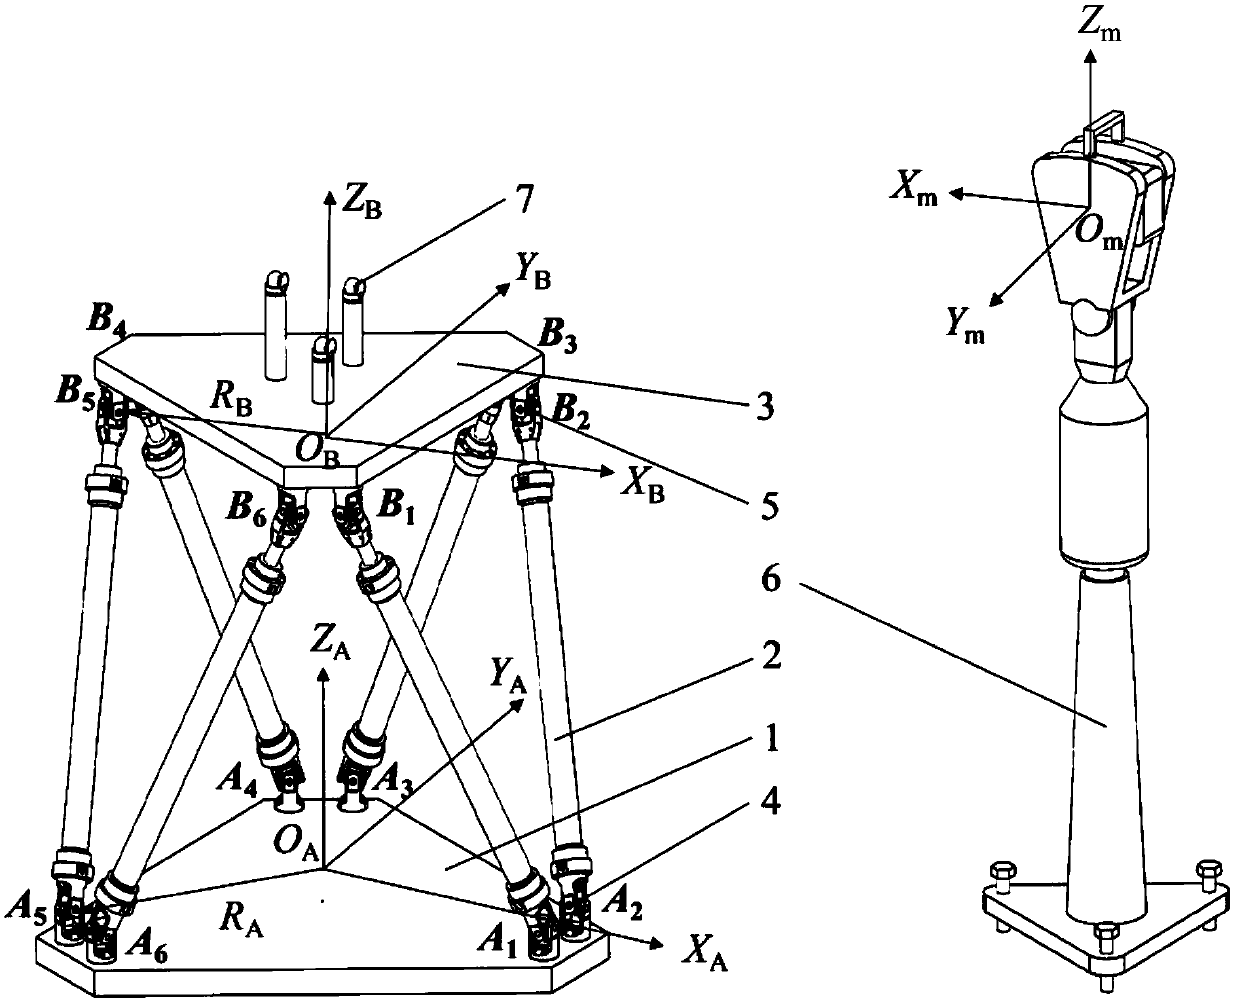 Kinematic calibration method for Stewart parallel robot